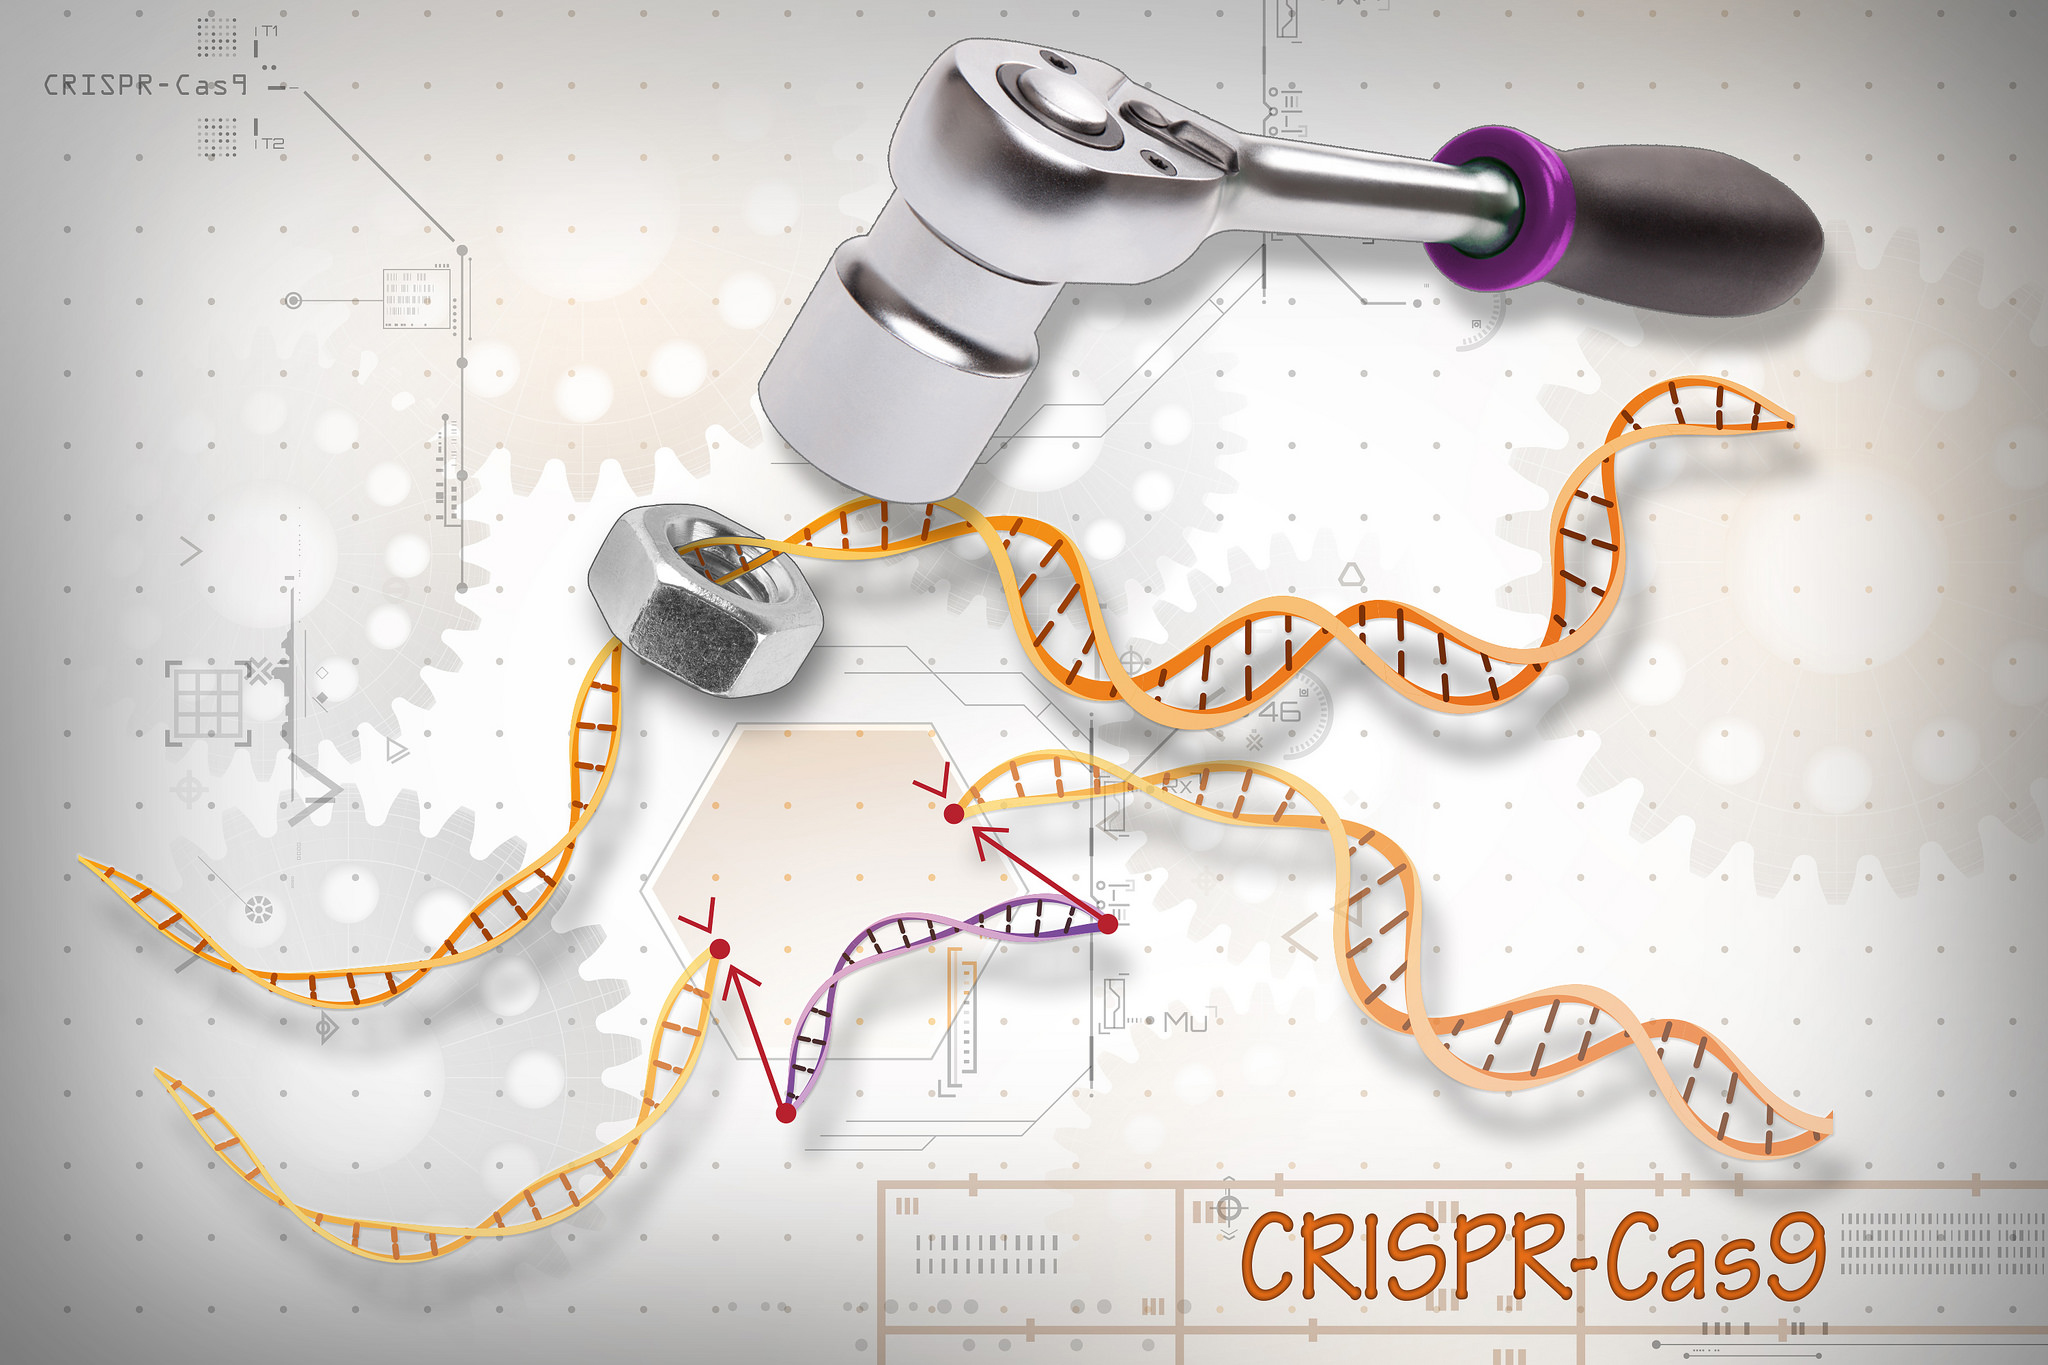 CRISPR-Cas9 Editing of the Genome